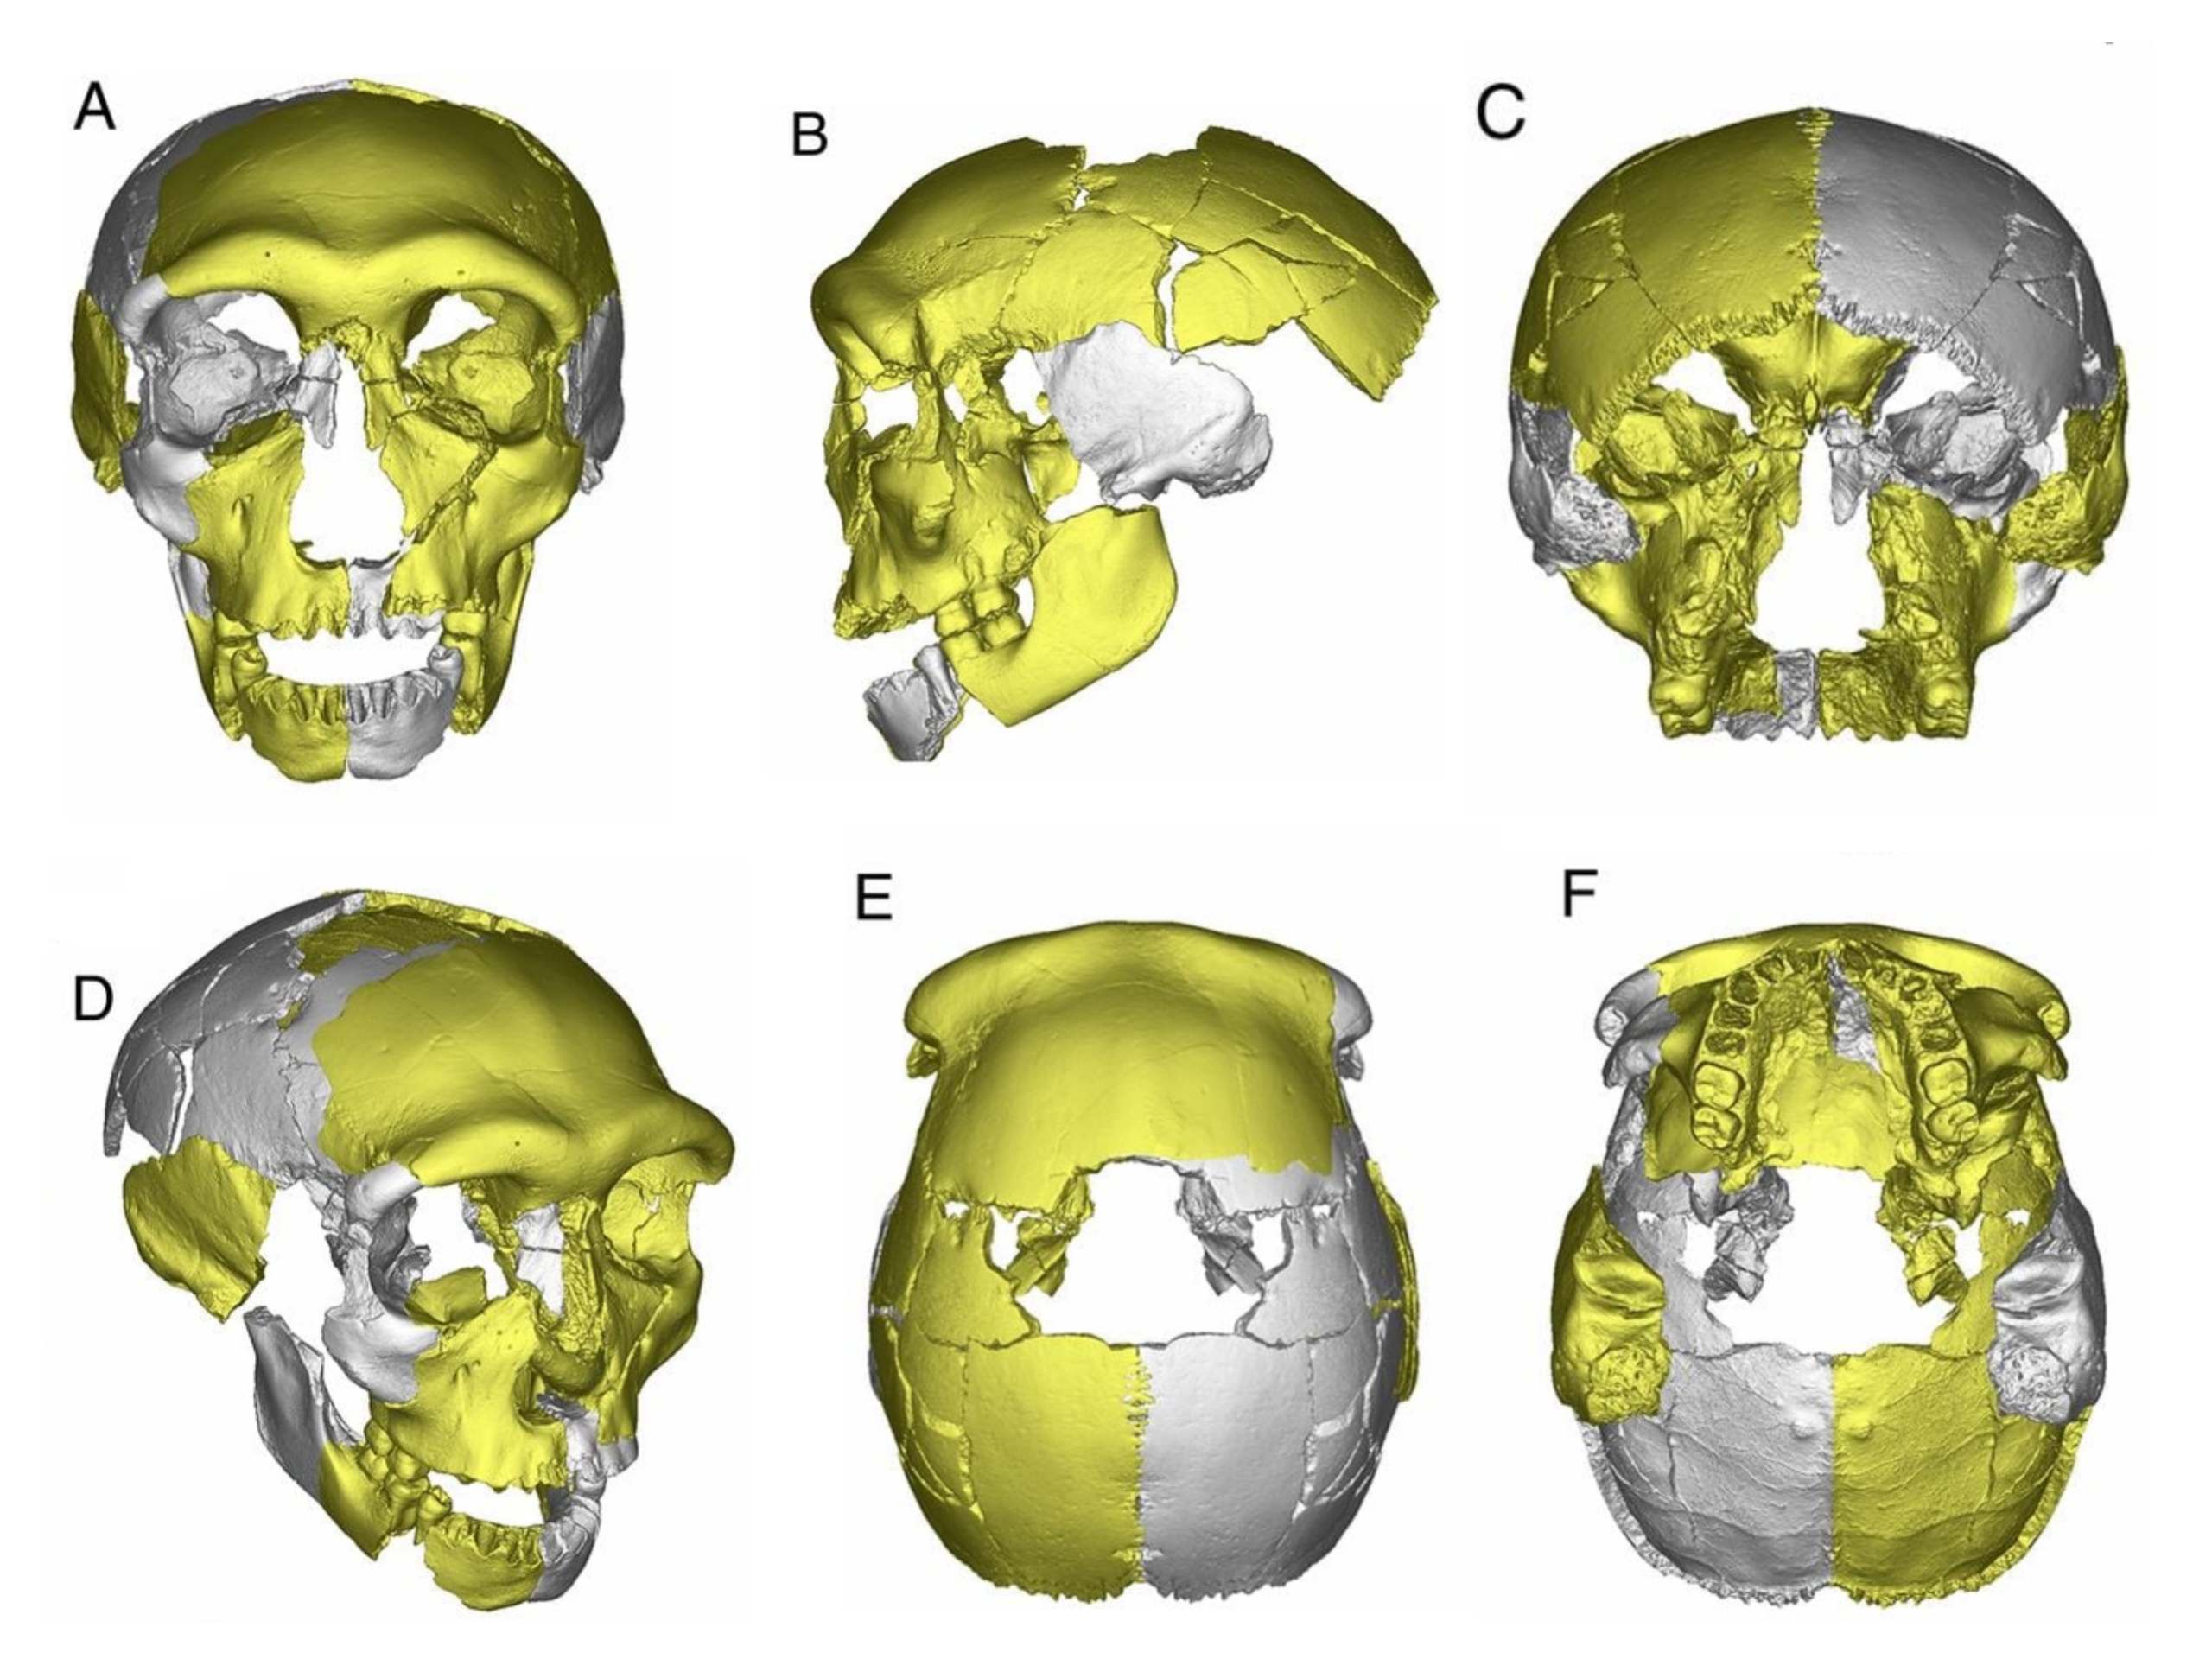 Craniul HLD 6 practic reconstruit